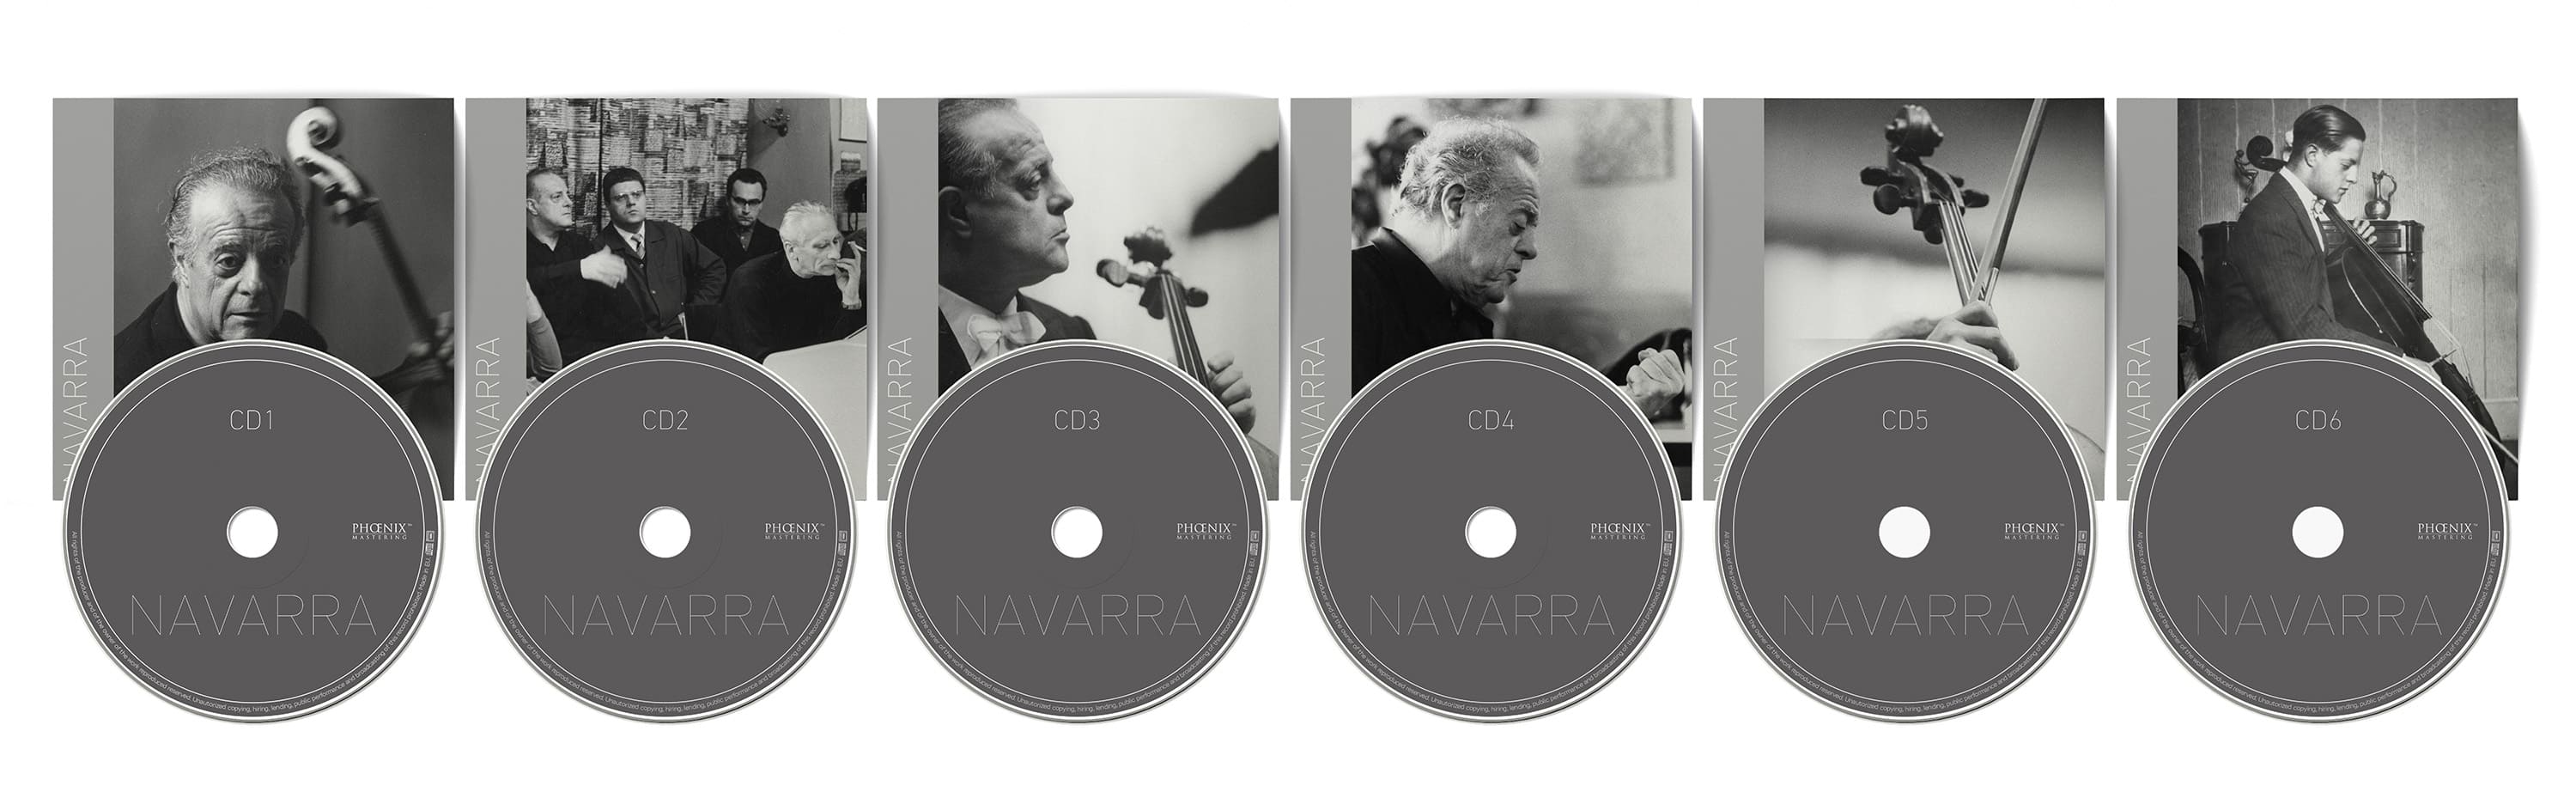 André Navarra - The Cello - Coffret 6 CD